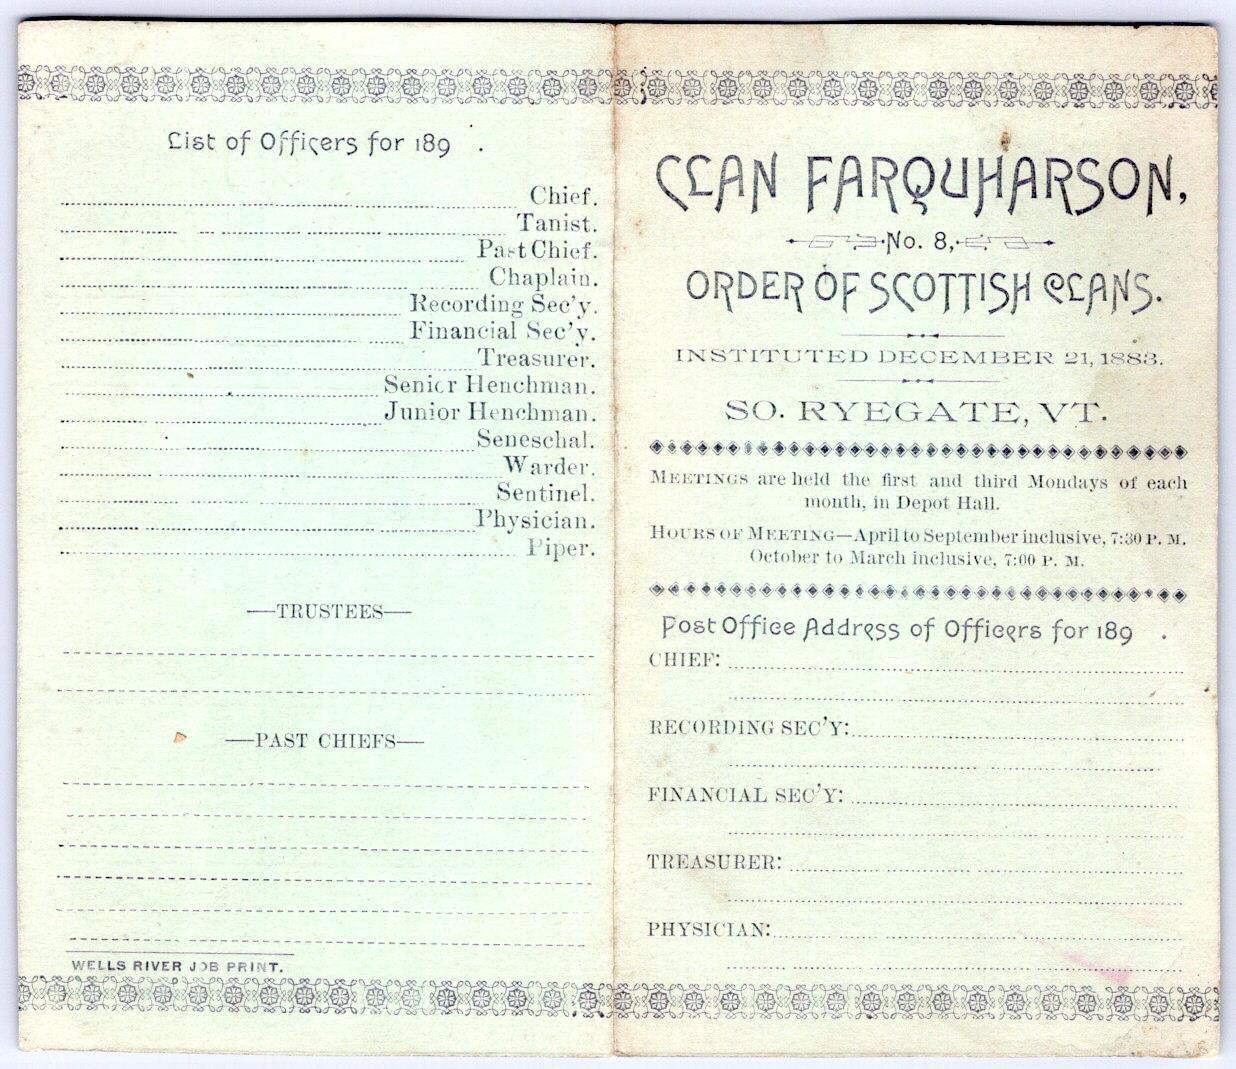 1890's SOUTH RYEGATE VERMONT CLAN FARQUHARSON #8 SCOTTISH FOLDER TRADE CARD